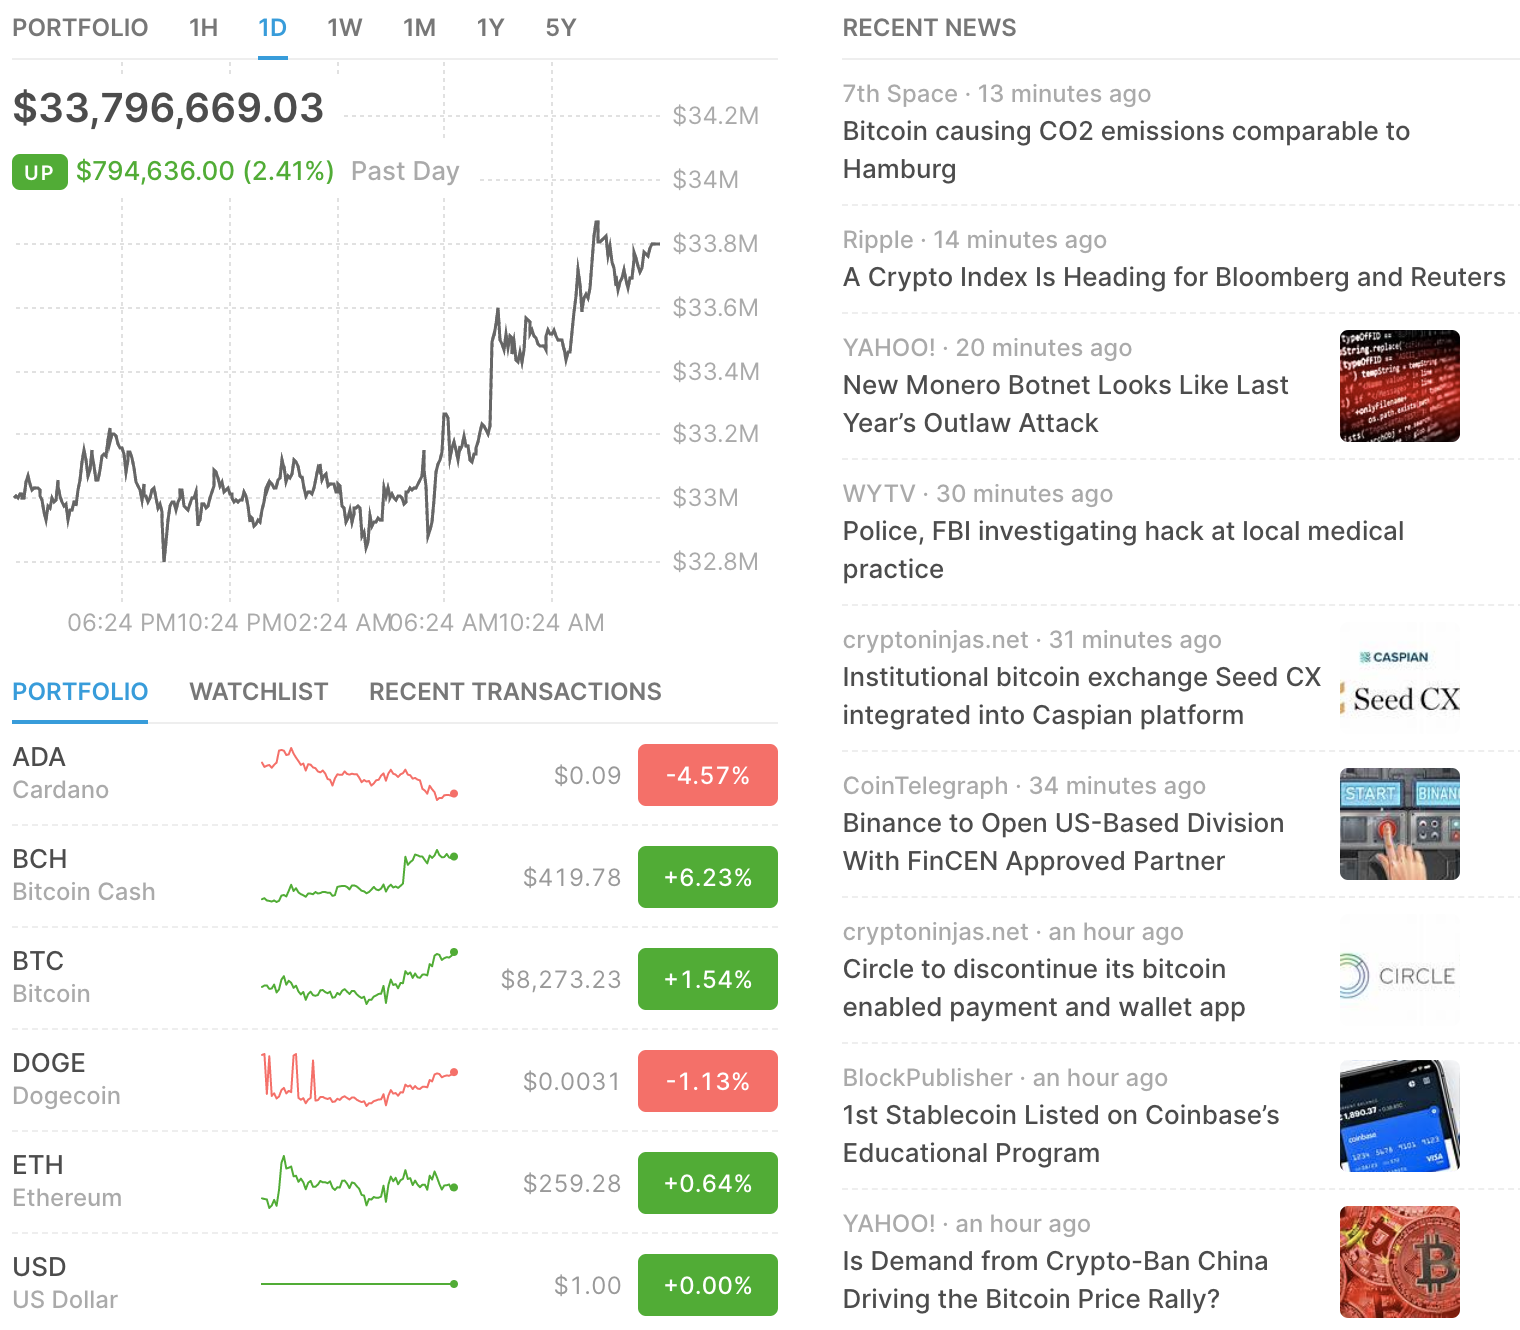 BitGo interface with portfolio holdings and news